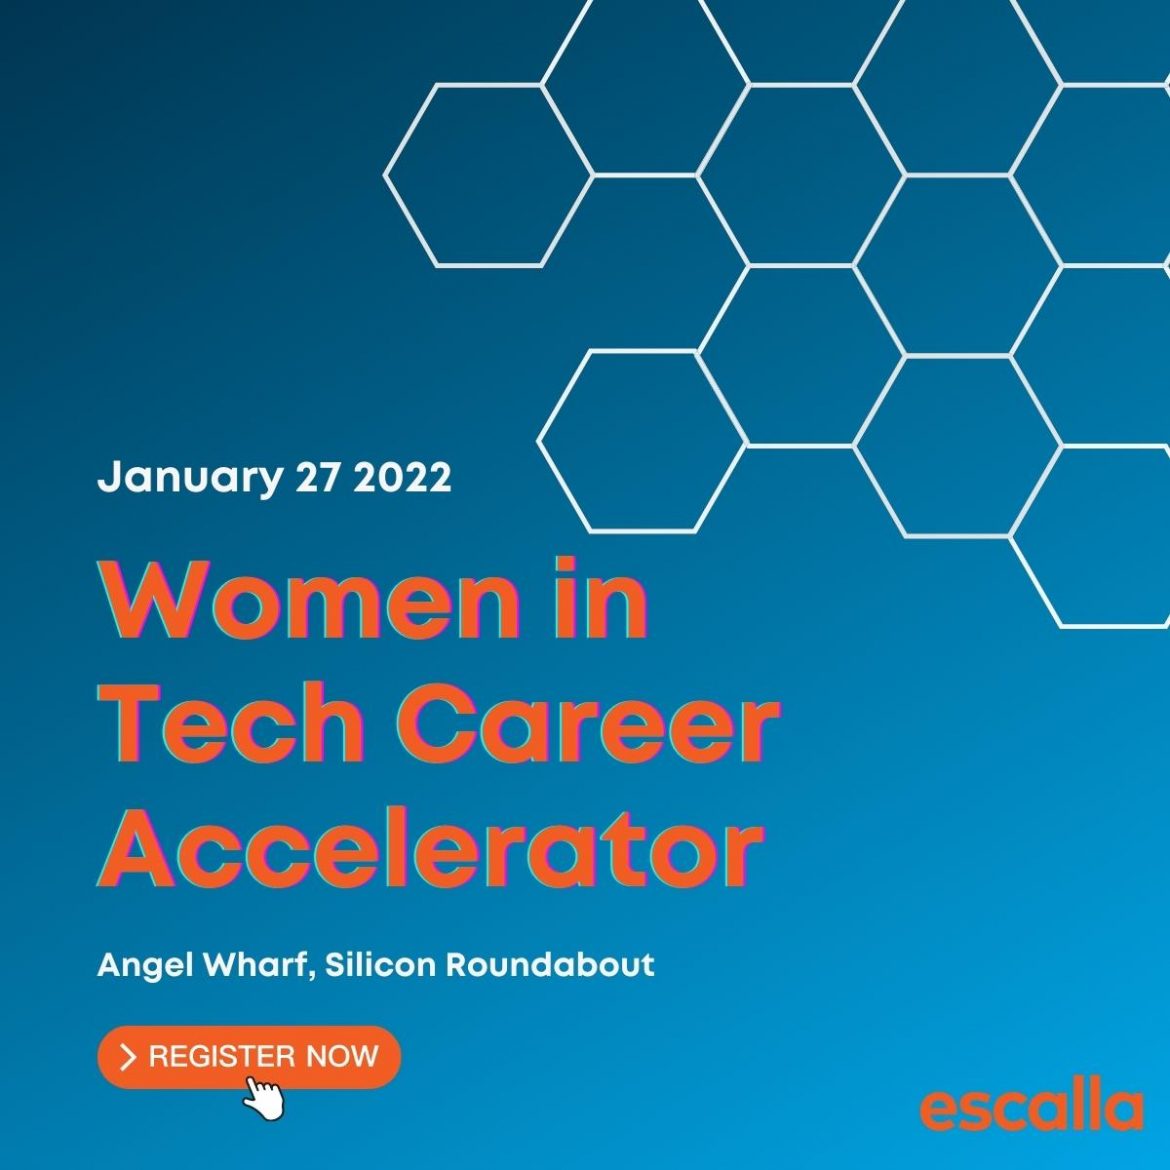 Women in Tech Career Accelerator